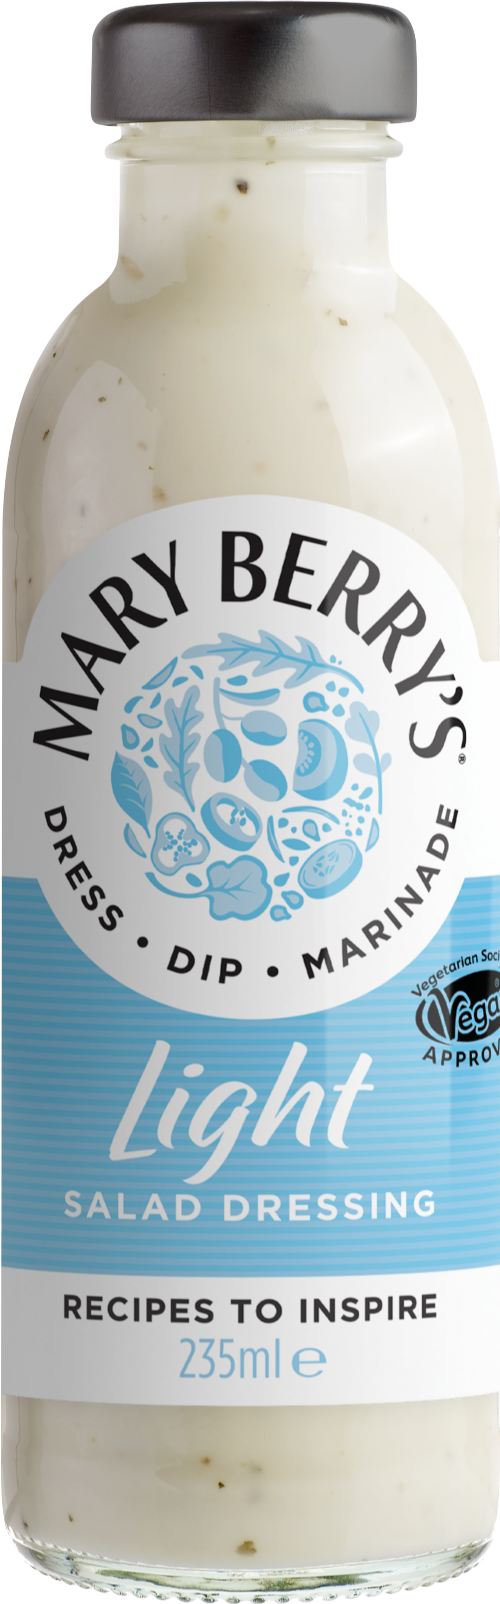 MARY BERRY'S Light Salad Dressing 235ml